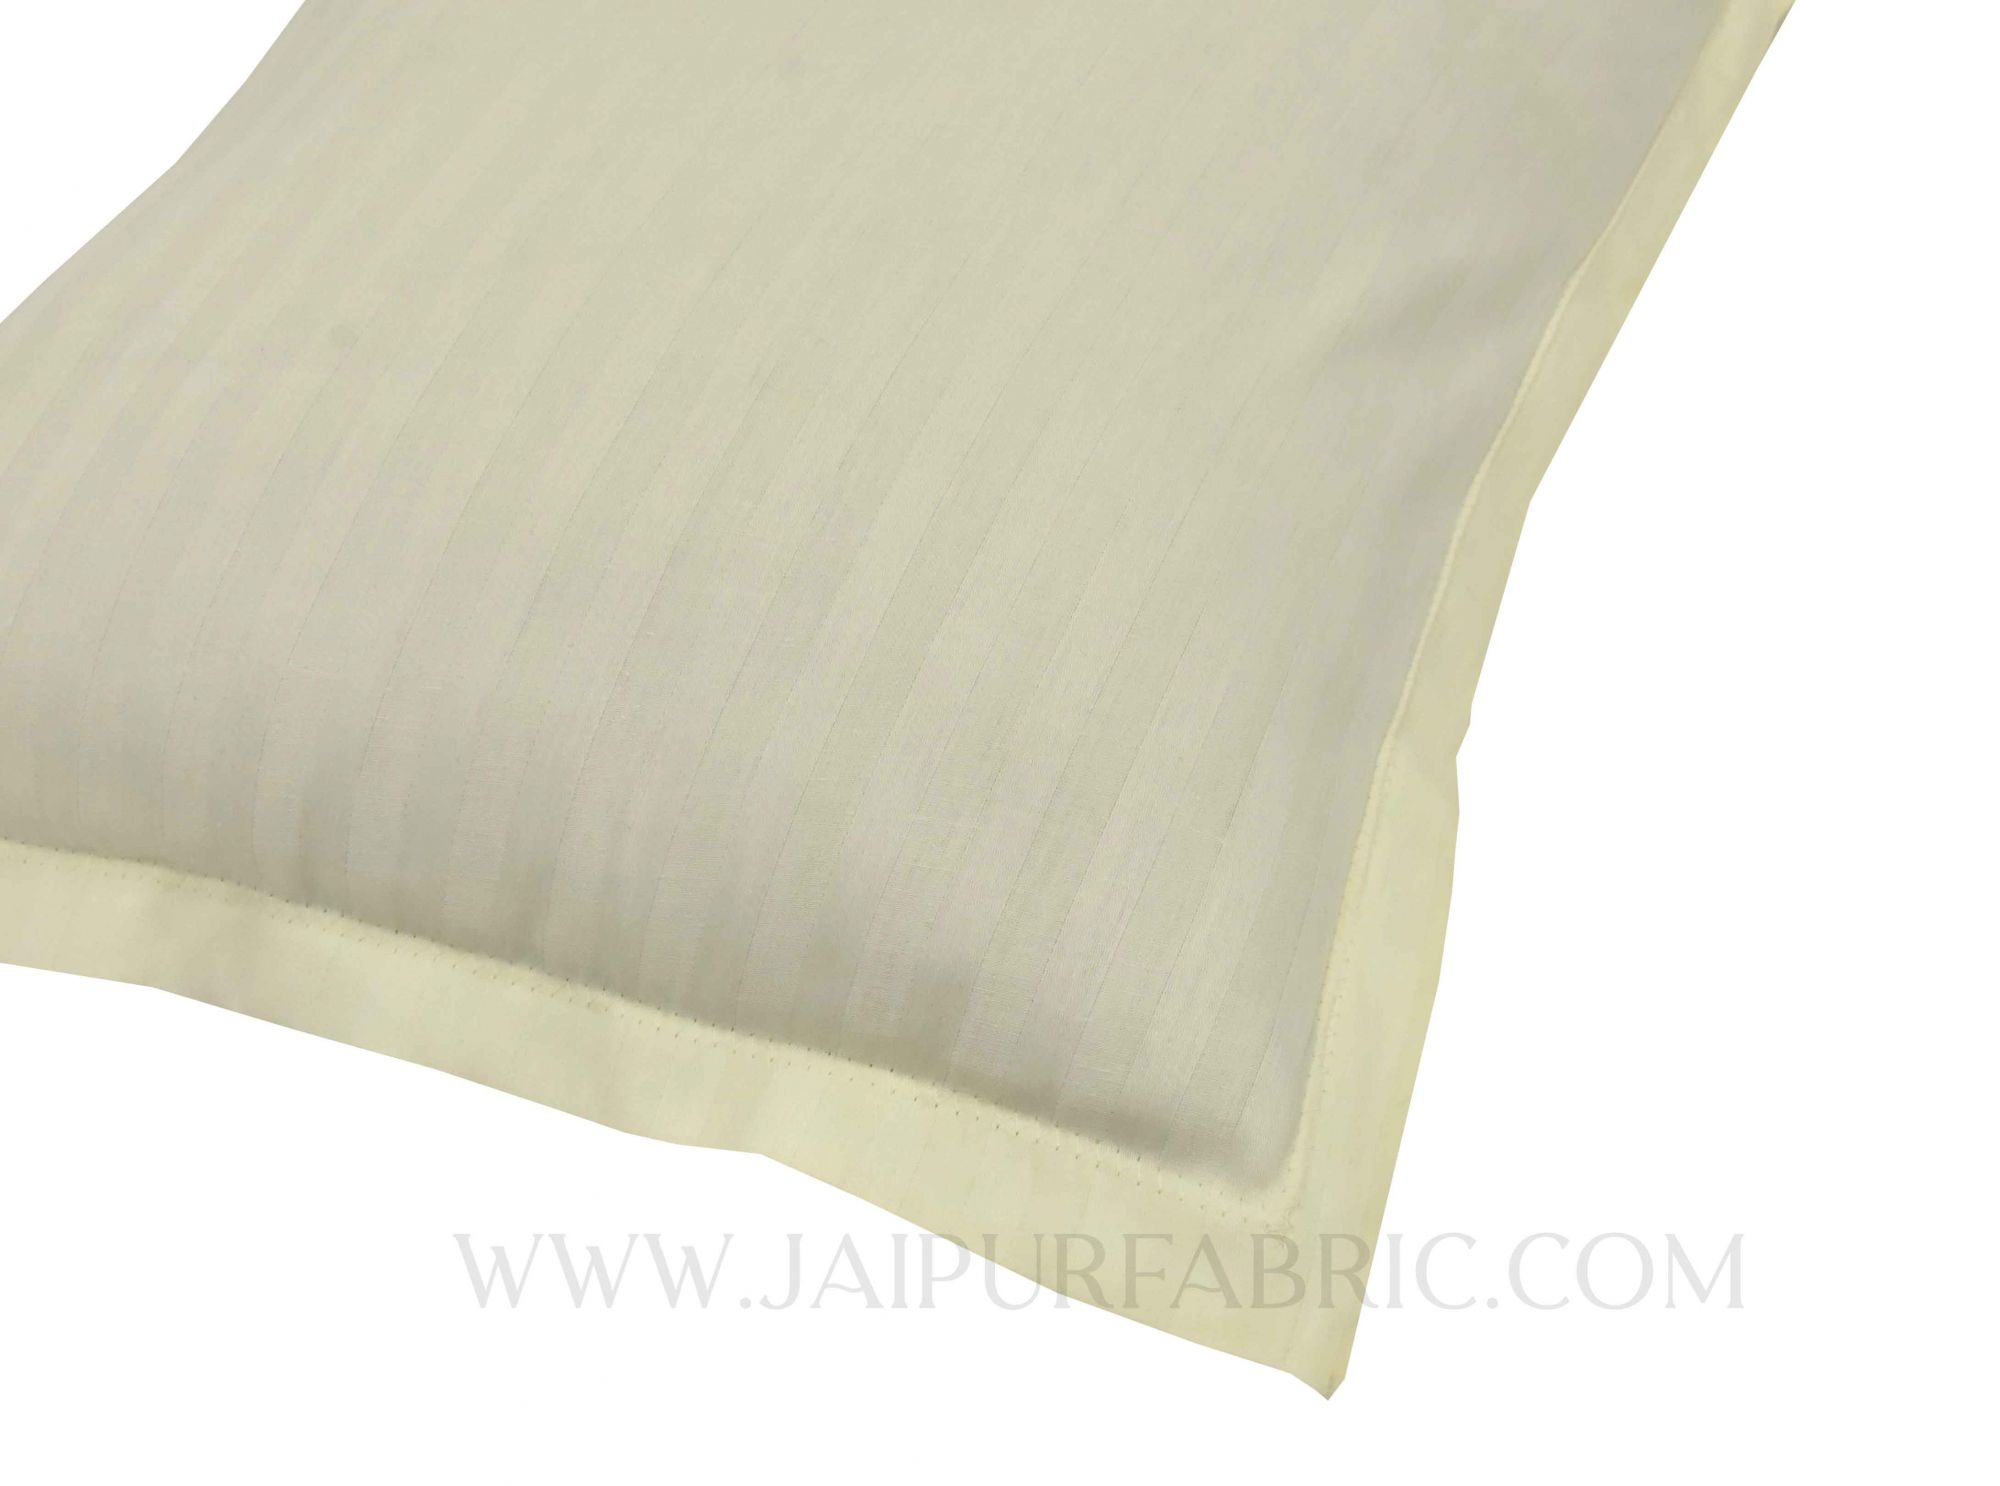 Cream Color Pillow Cover Pair